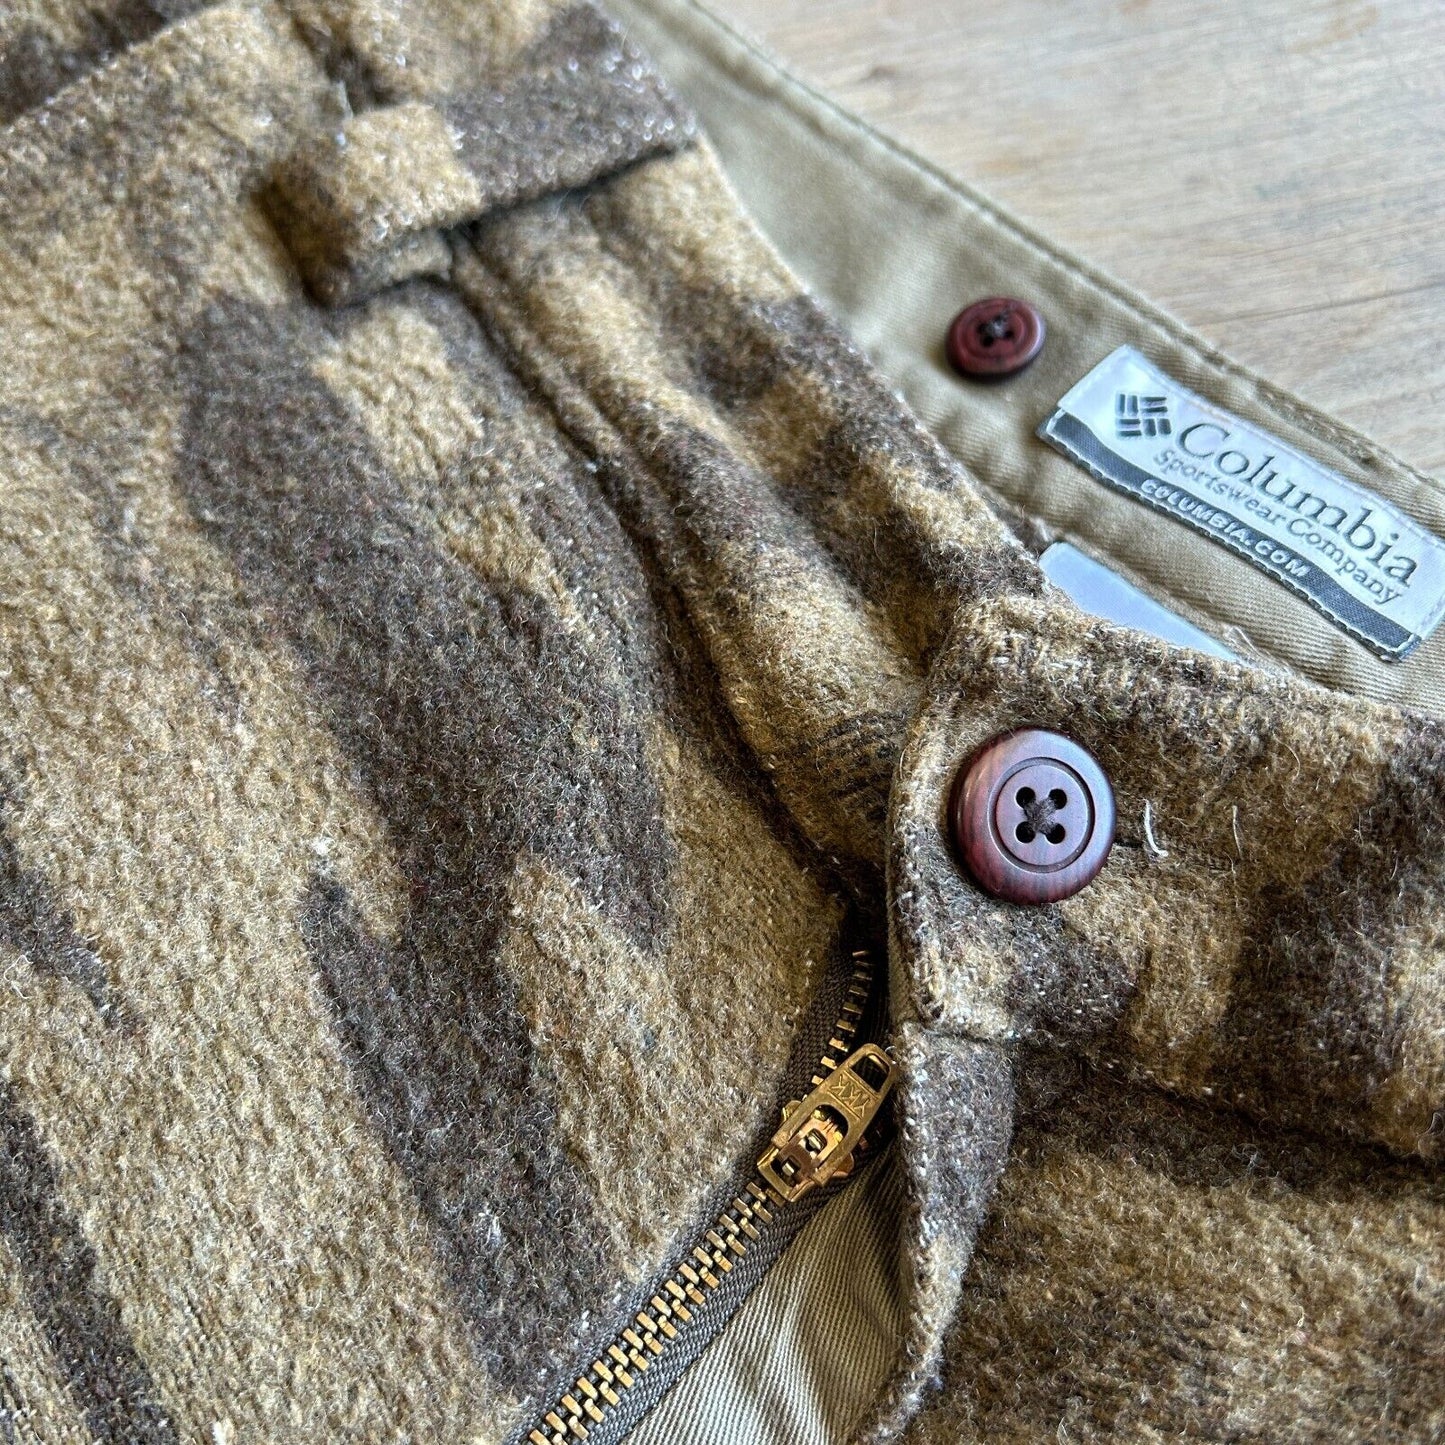 VINTAGE | Columbia Sportswear Camo Wool Blend Cargo Pants sz W38 L32